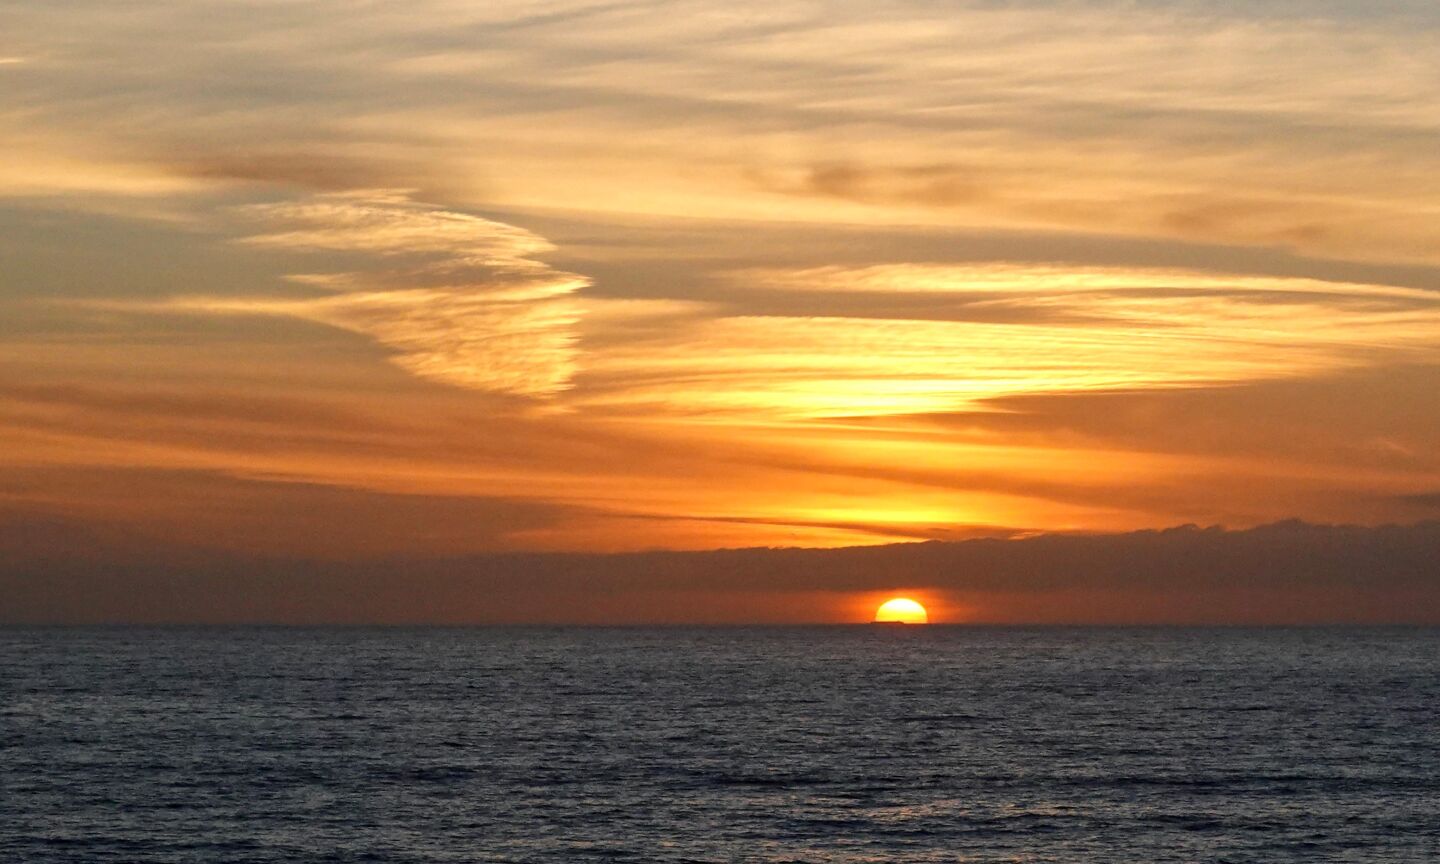 The setting sun paints the sky over La Jolla Shores.